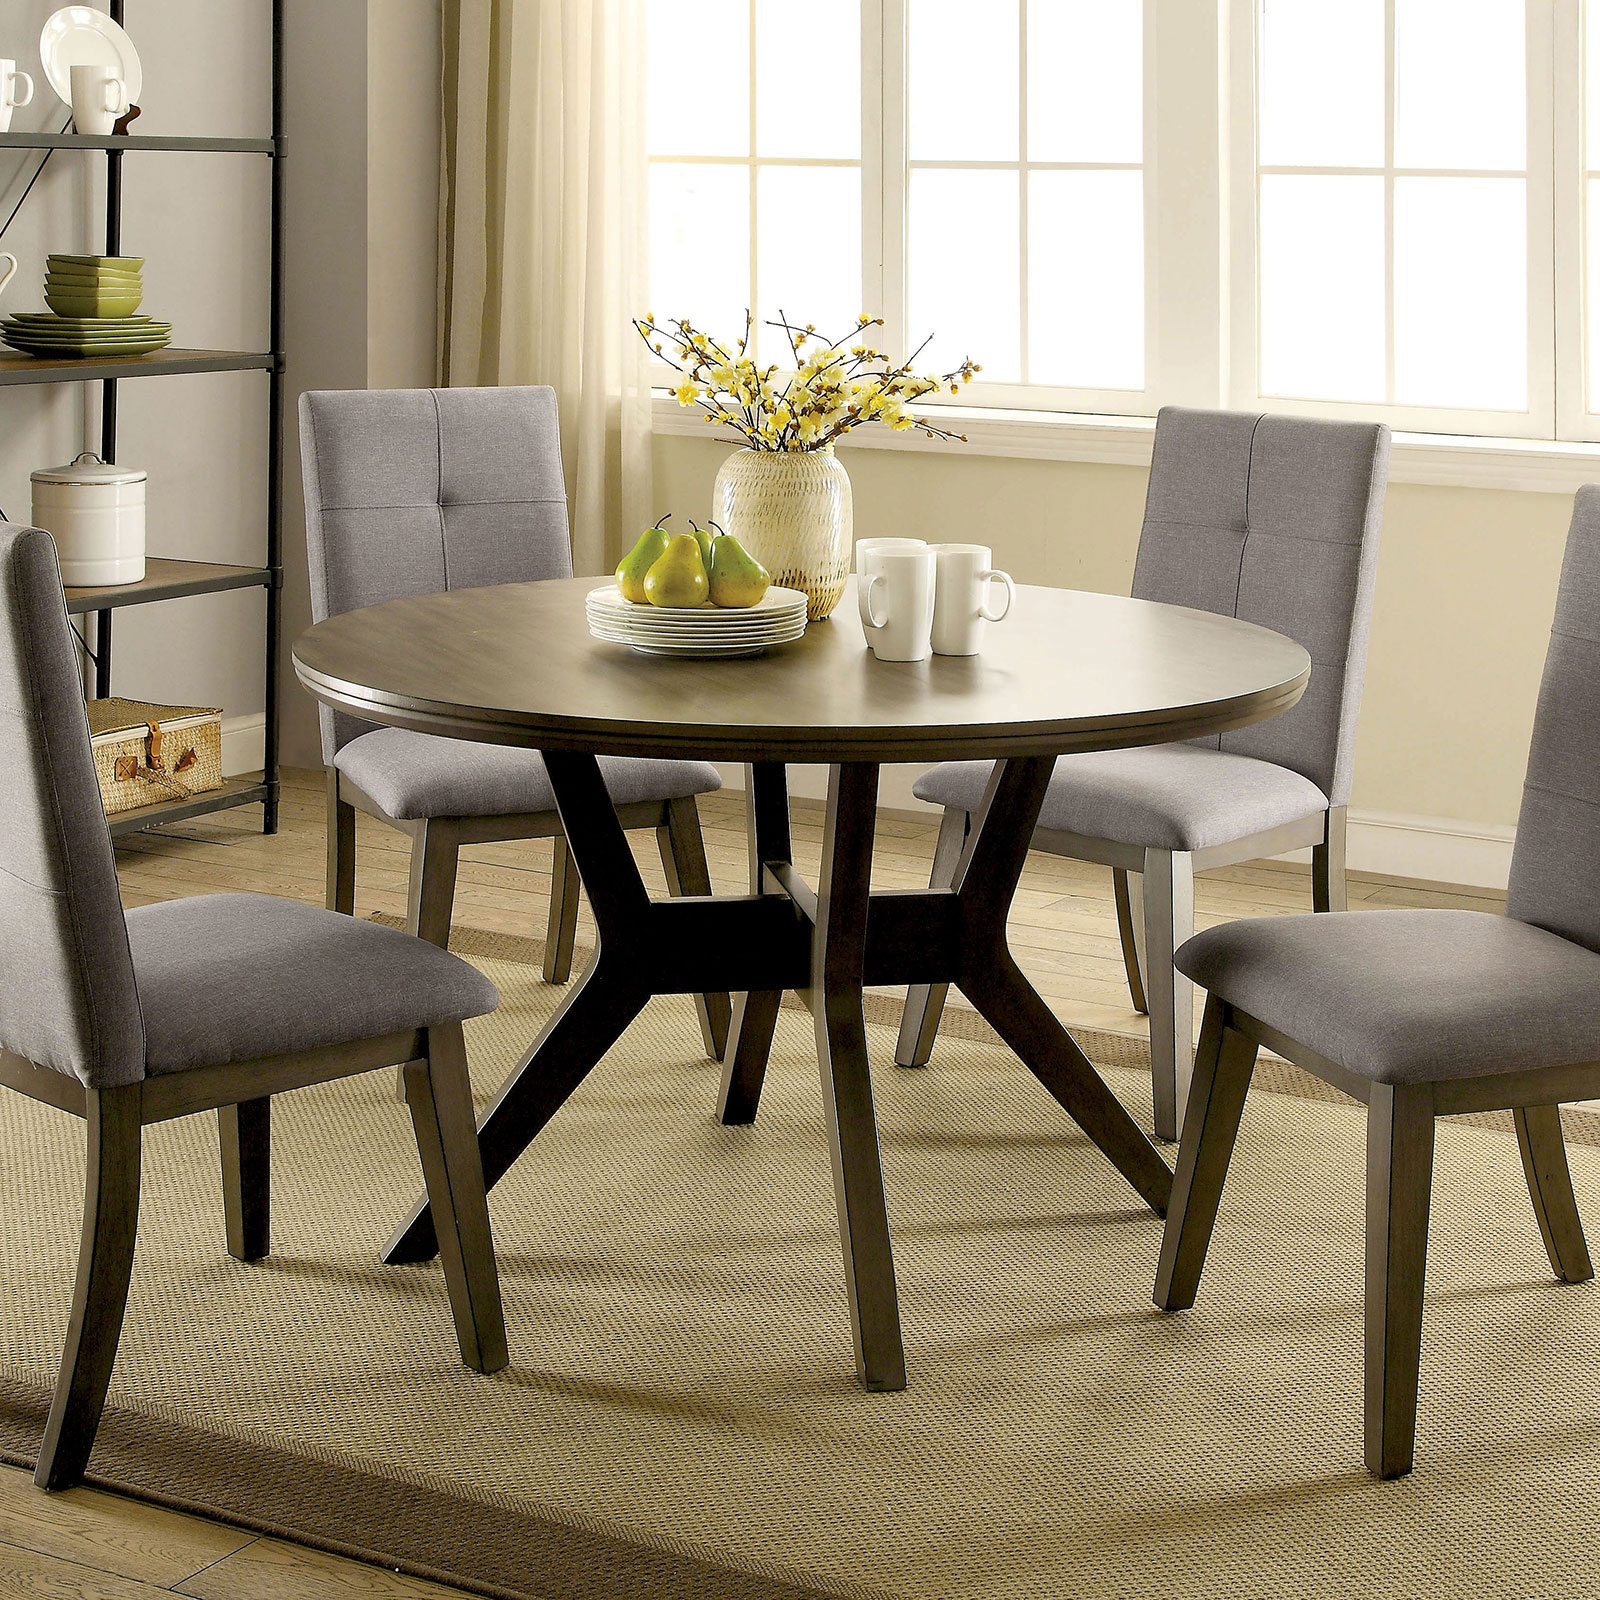 Dining :: Abelone Round Table Mid-Century Modern Gray